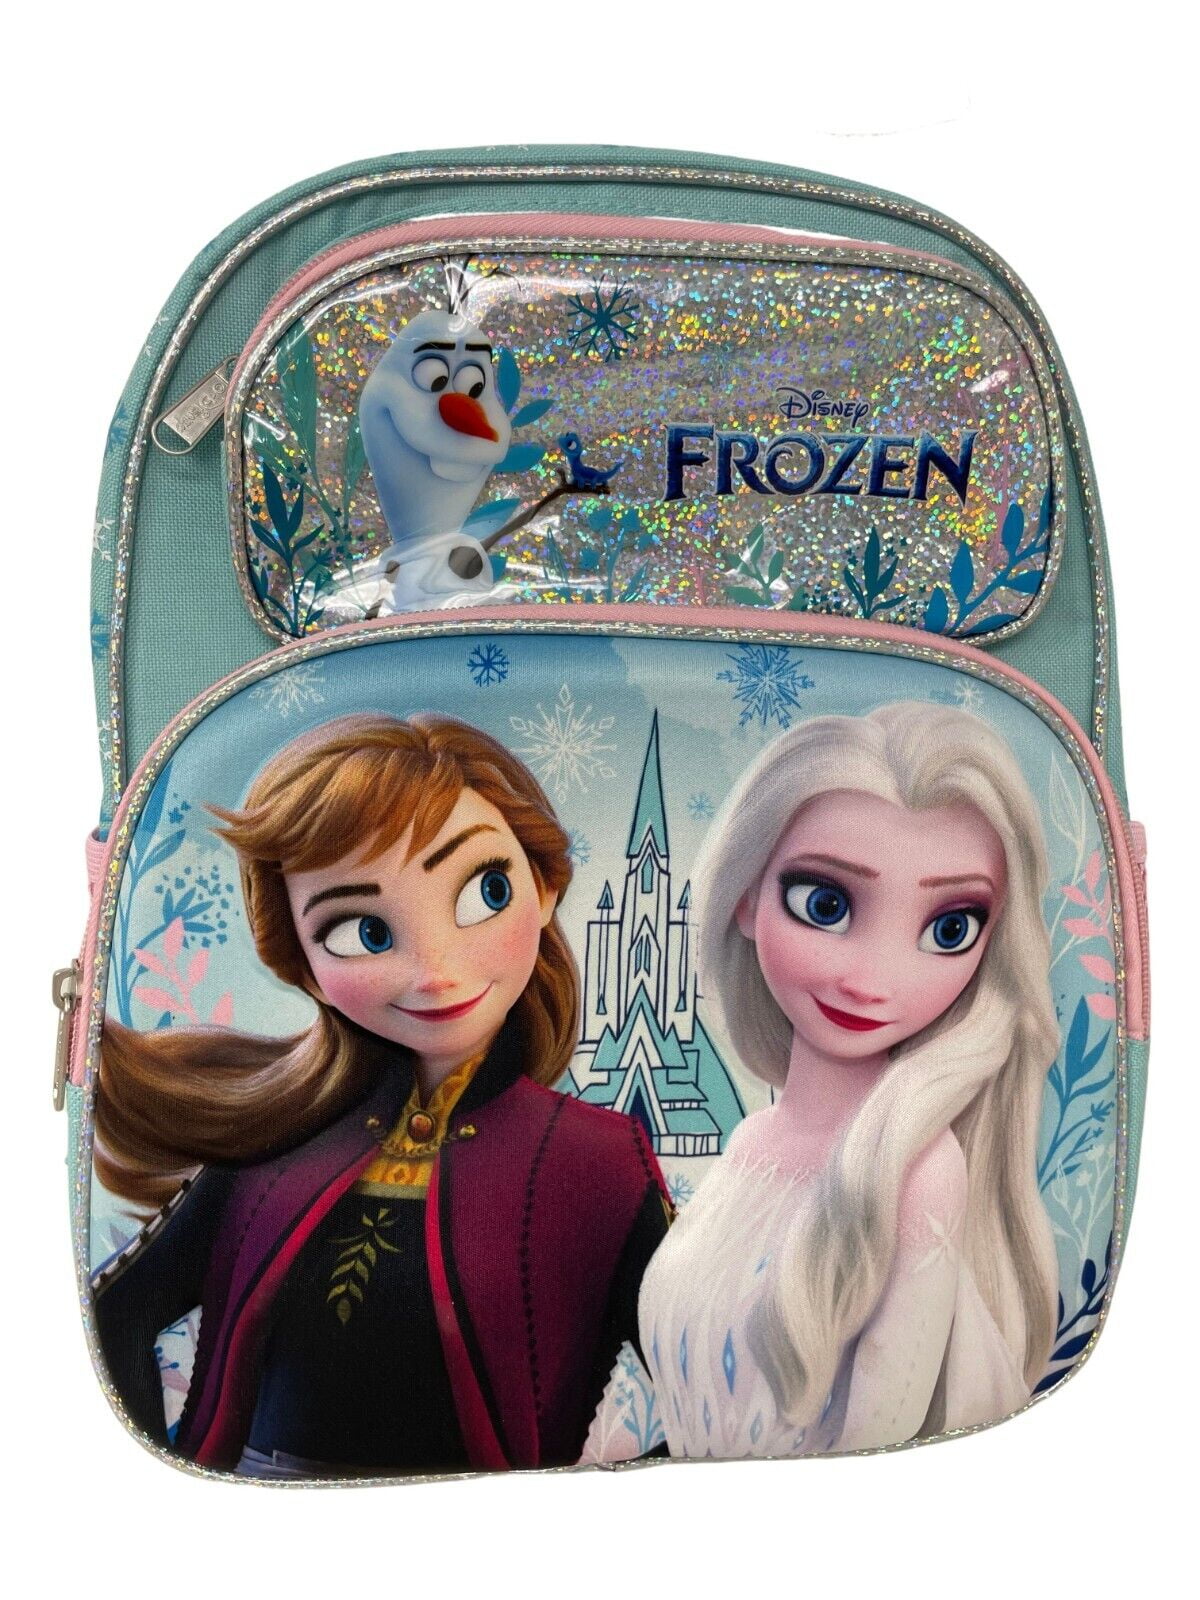 Disney Frozen Elsa Anna 3D Face 12 Inches Toddler Backpack 86591661 d383 4825 8527 6c81ab05a207.78afbf7593ae183edb82260680198871